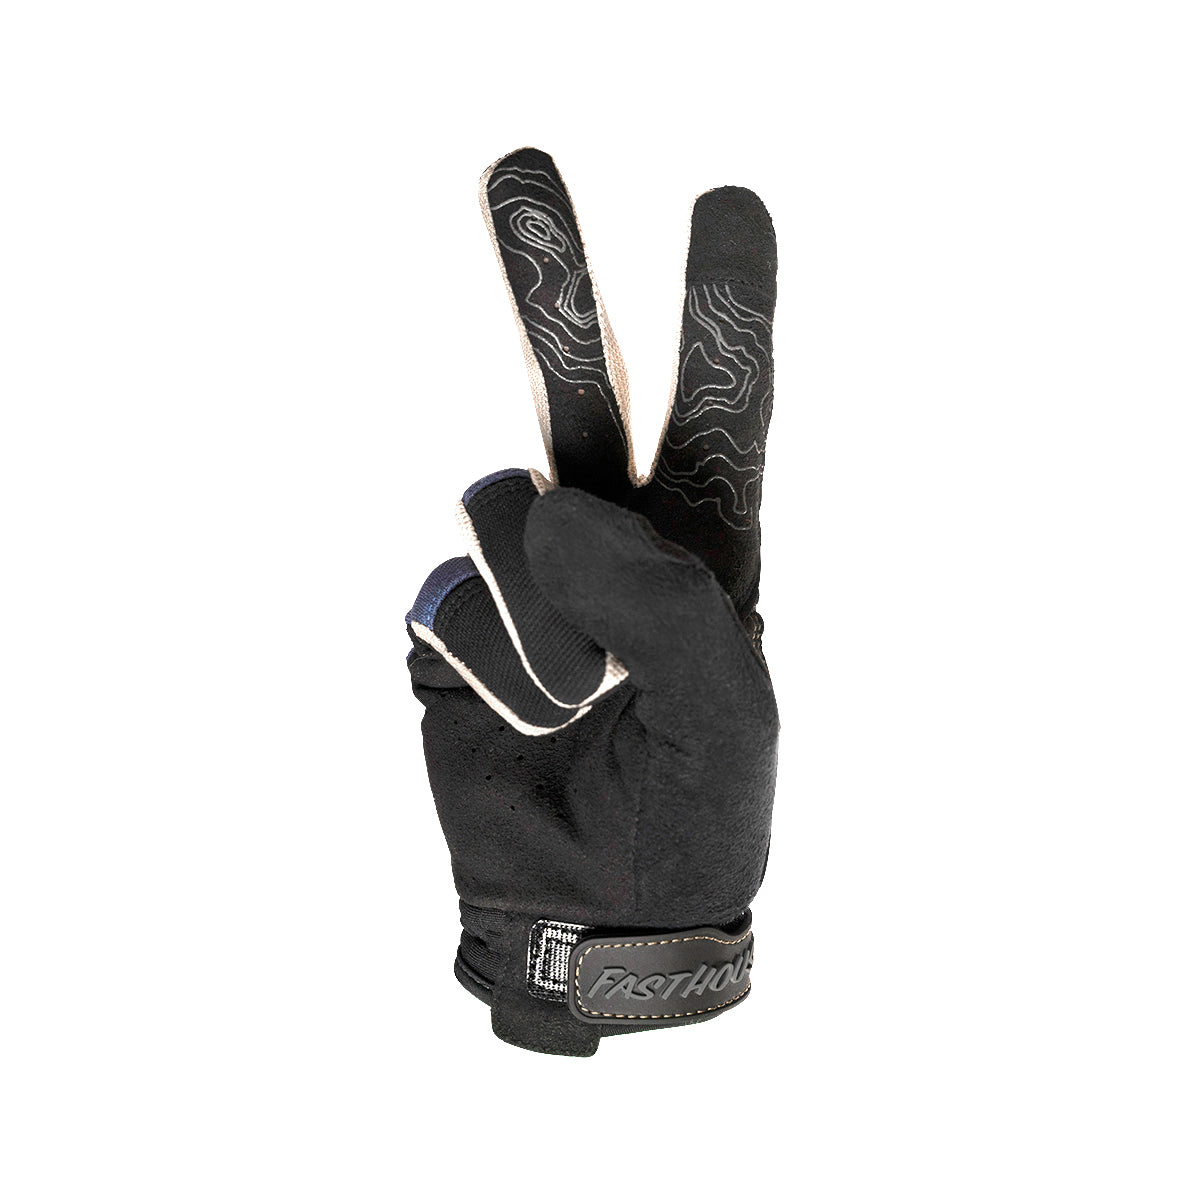 Ridgeline Ronin Youth Glove - Midnight Navy